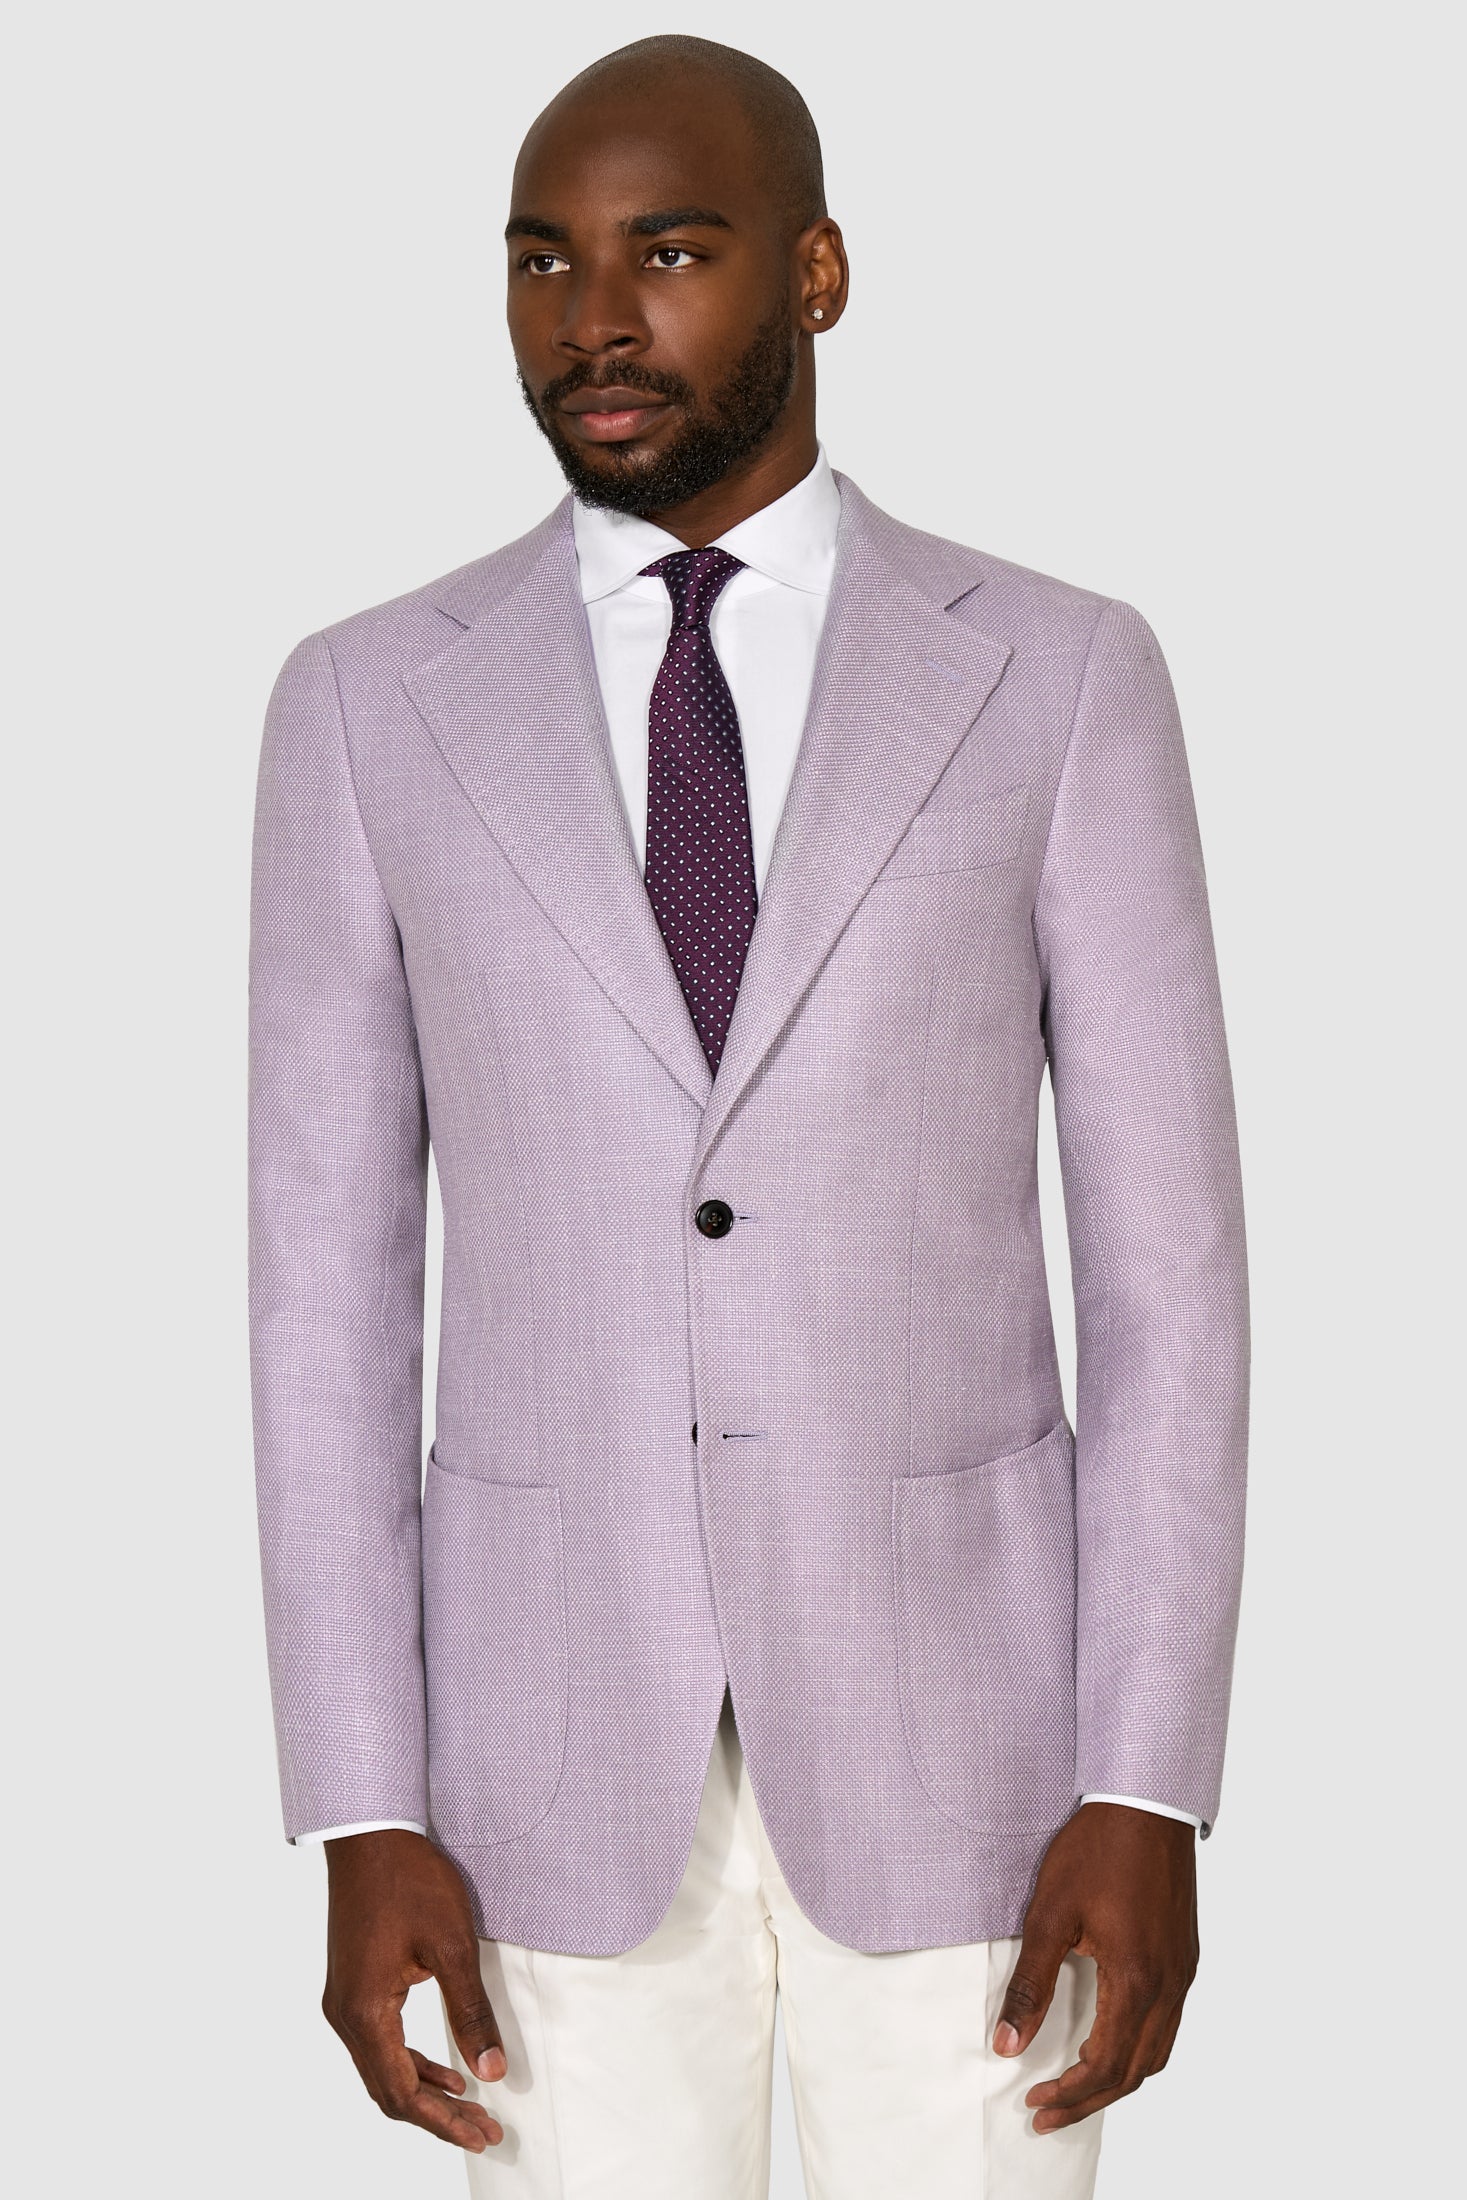 New Suitsupply Havana Lilac Wool, Silk, Linen, Cashmere Wide Lapel Blazer - Size 40L